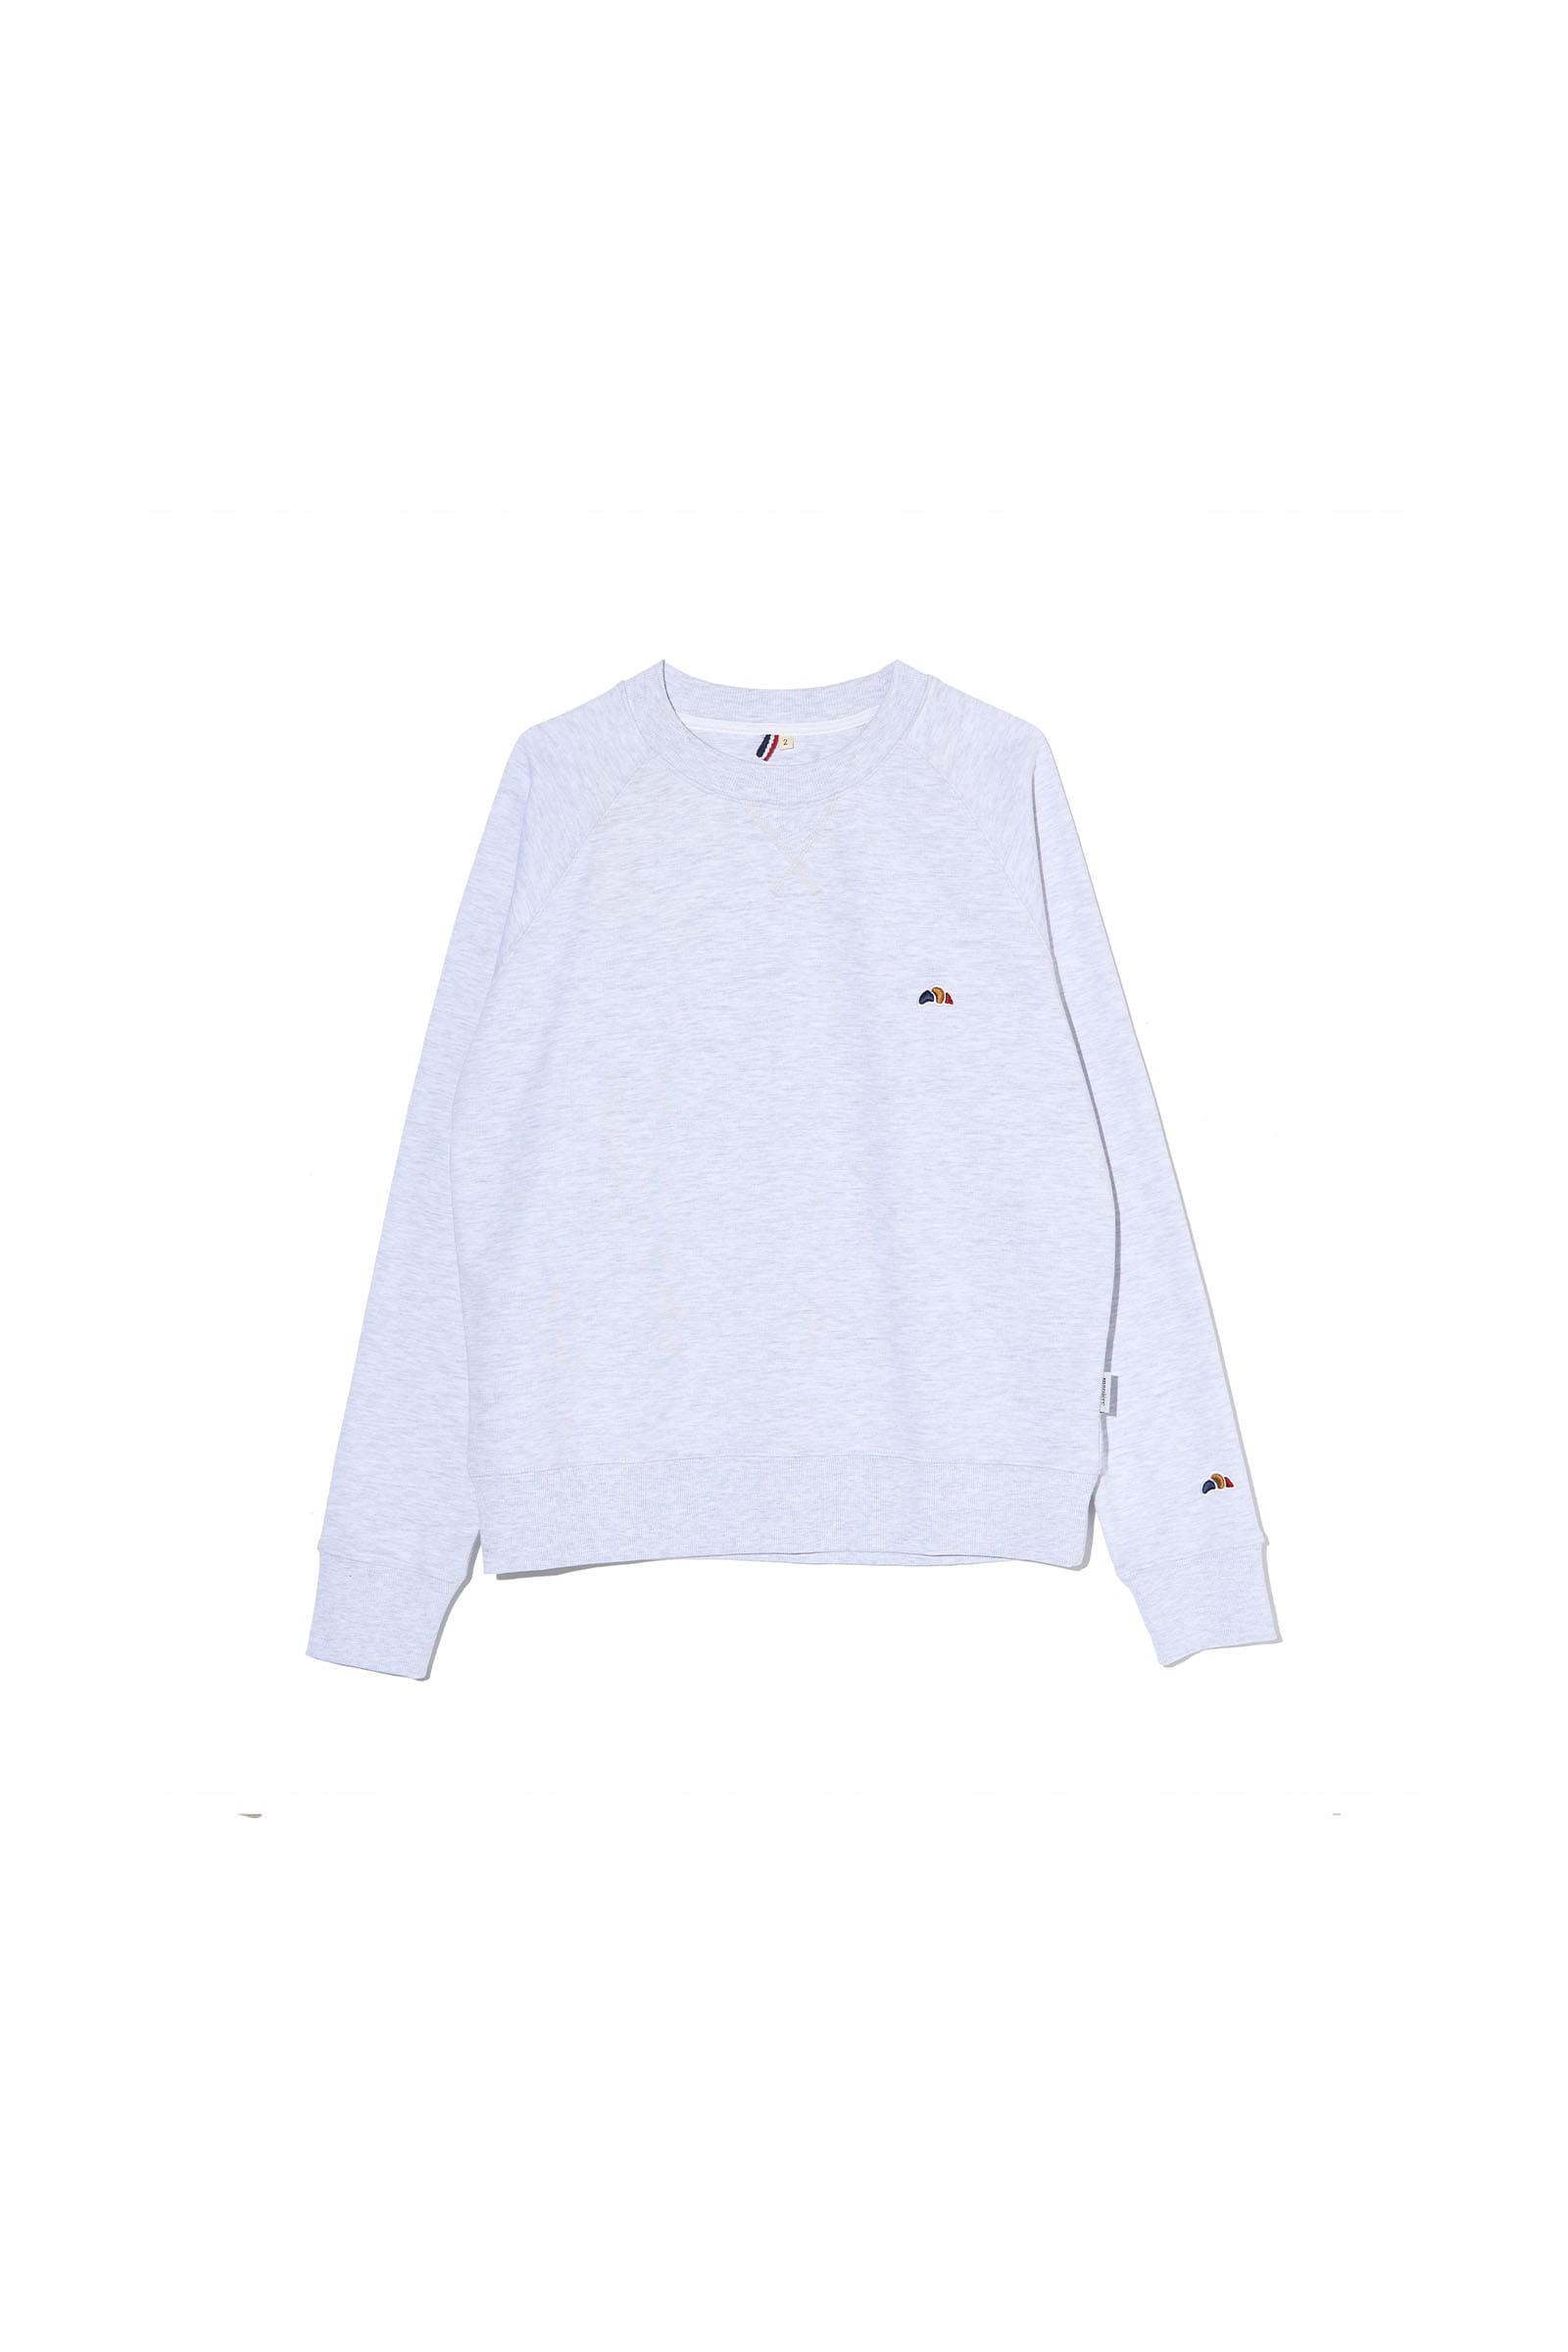 ep.6 Croissant symbol sweatshirts (Cool grey)